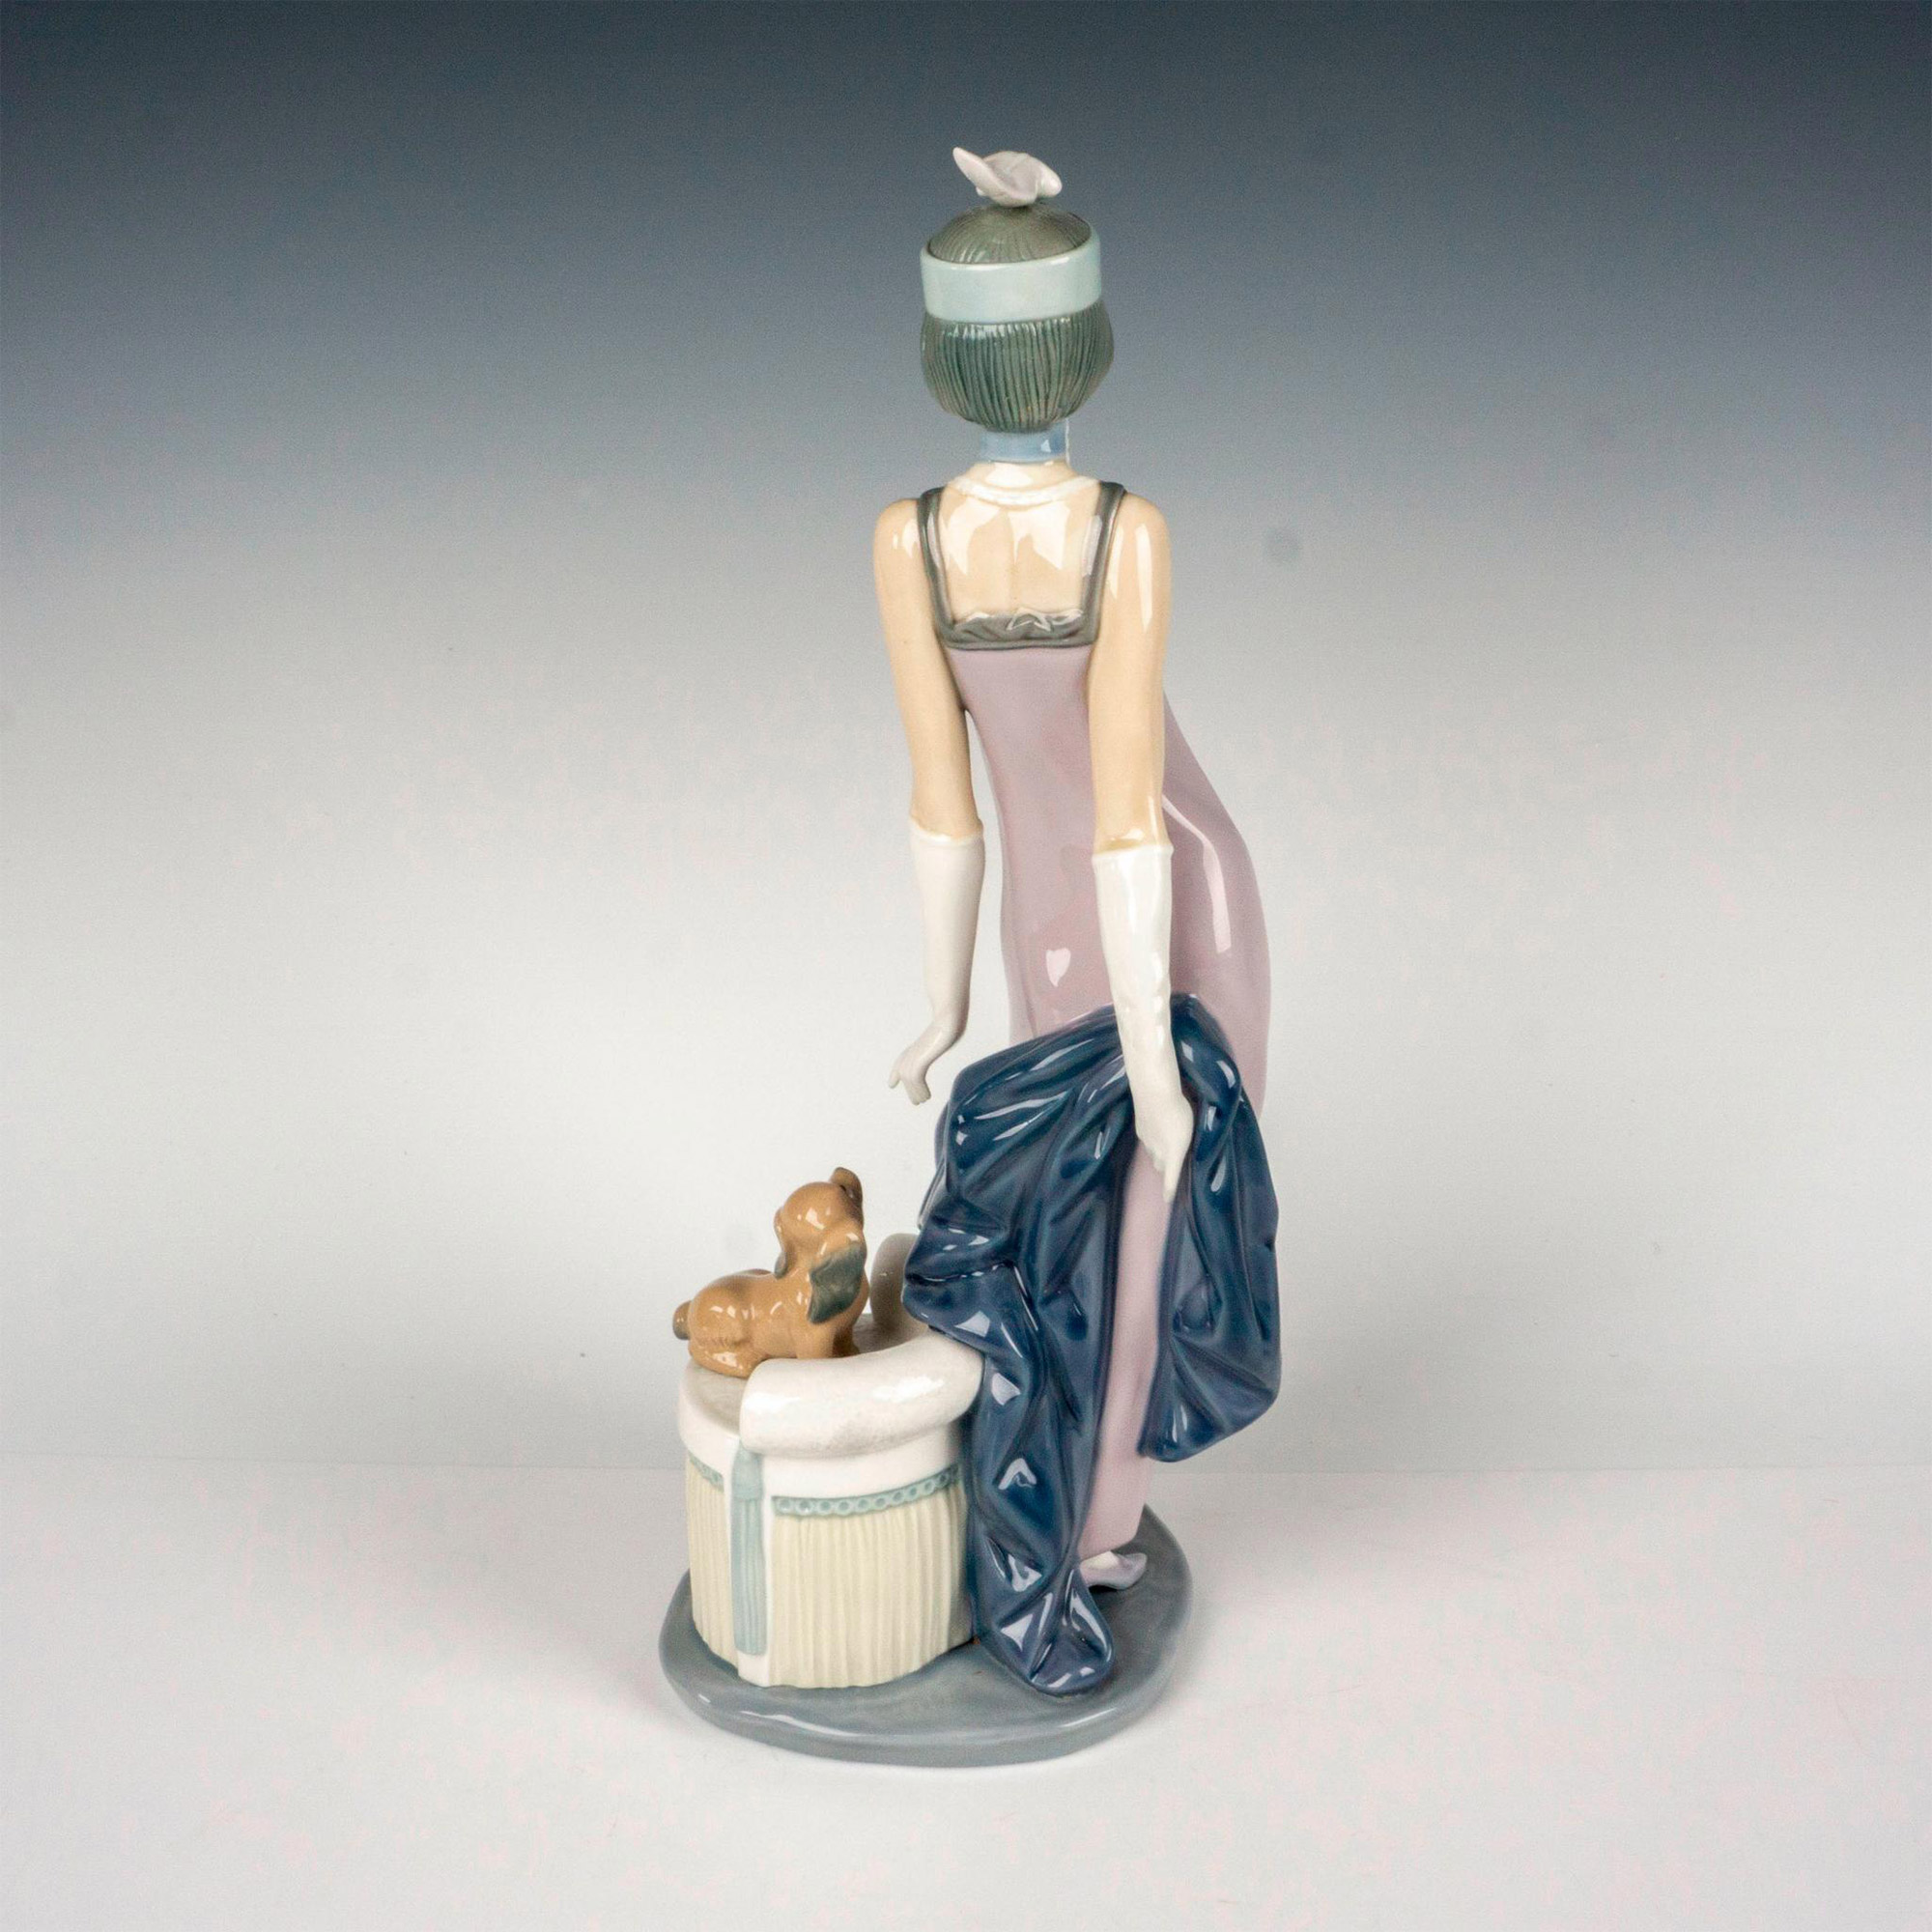 Couplet Lady 1005174 - Lladro Porcelain Figurine - Image 2 of 4